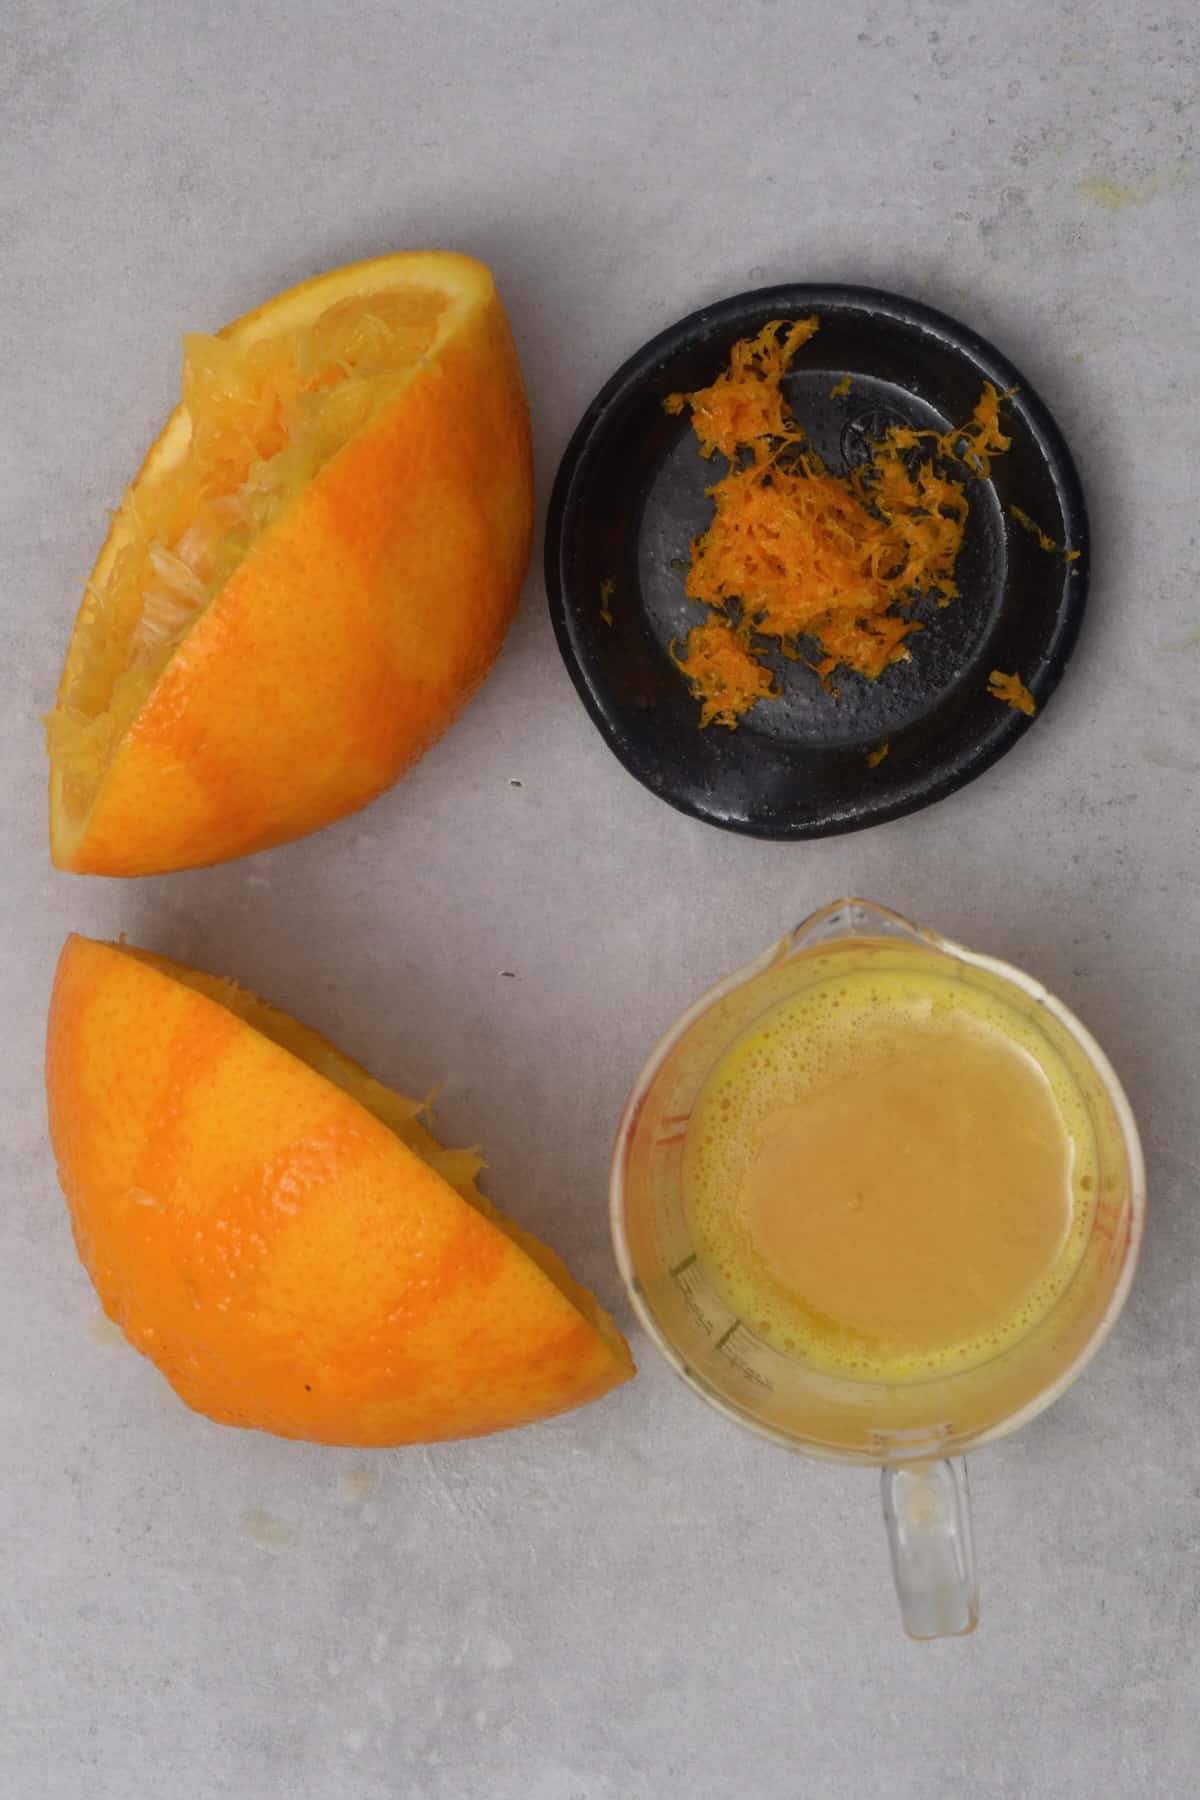 Zested and juiced orange